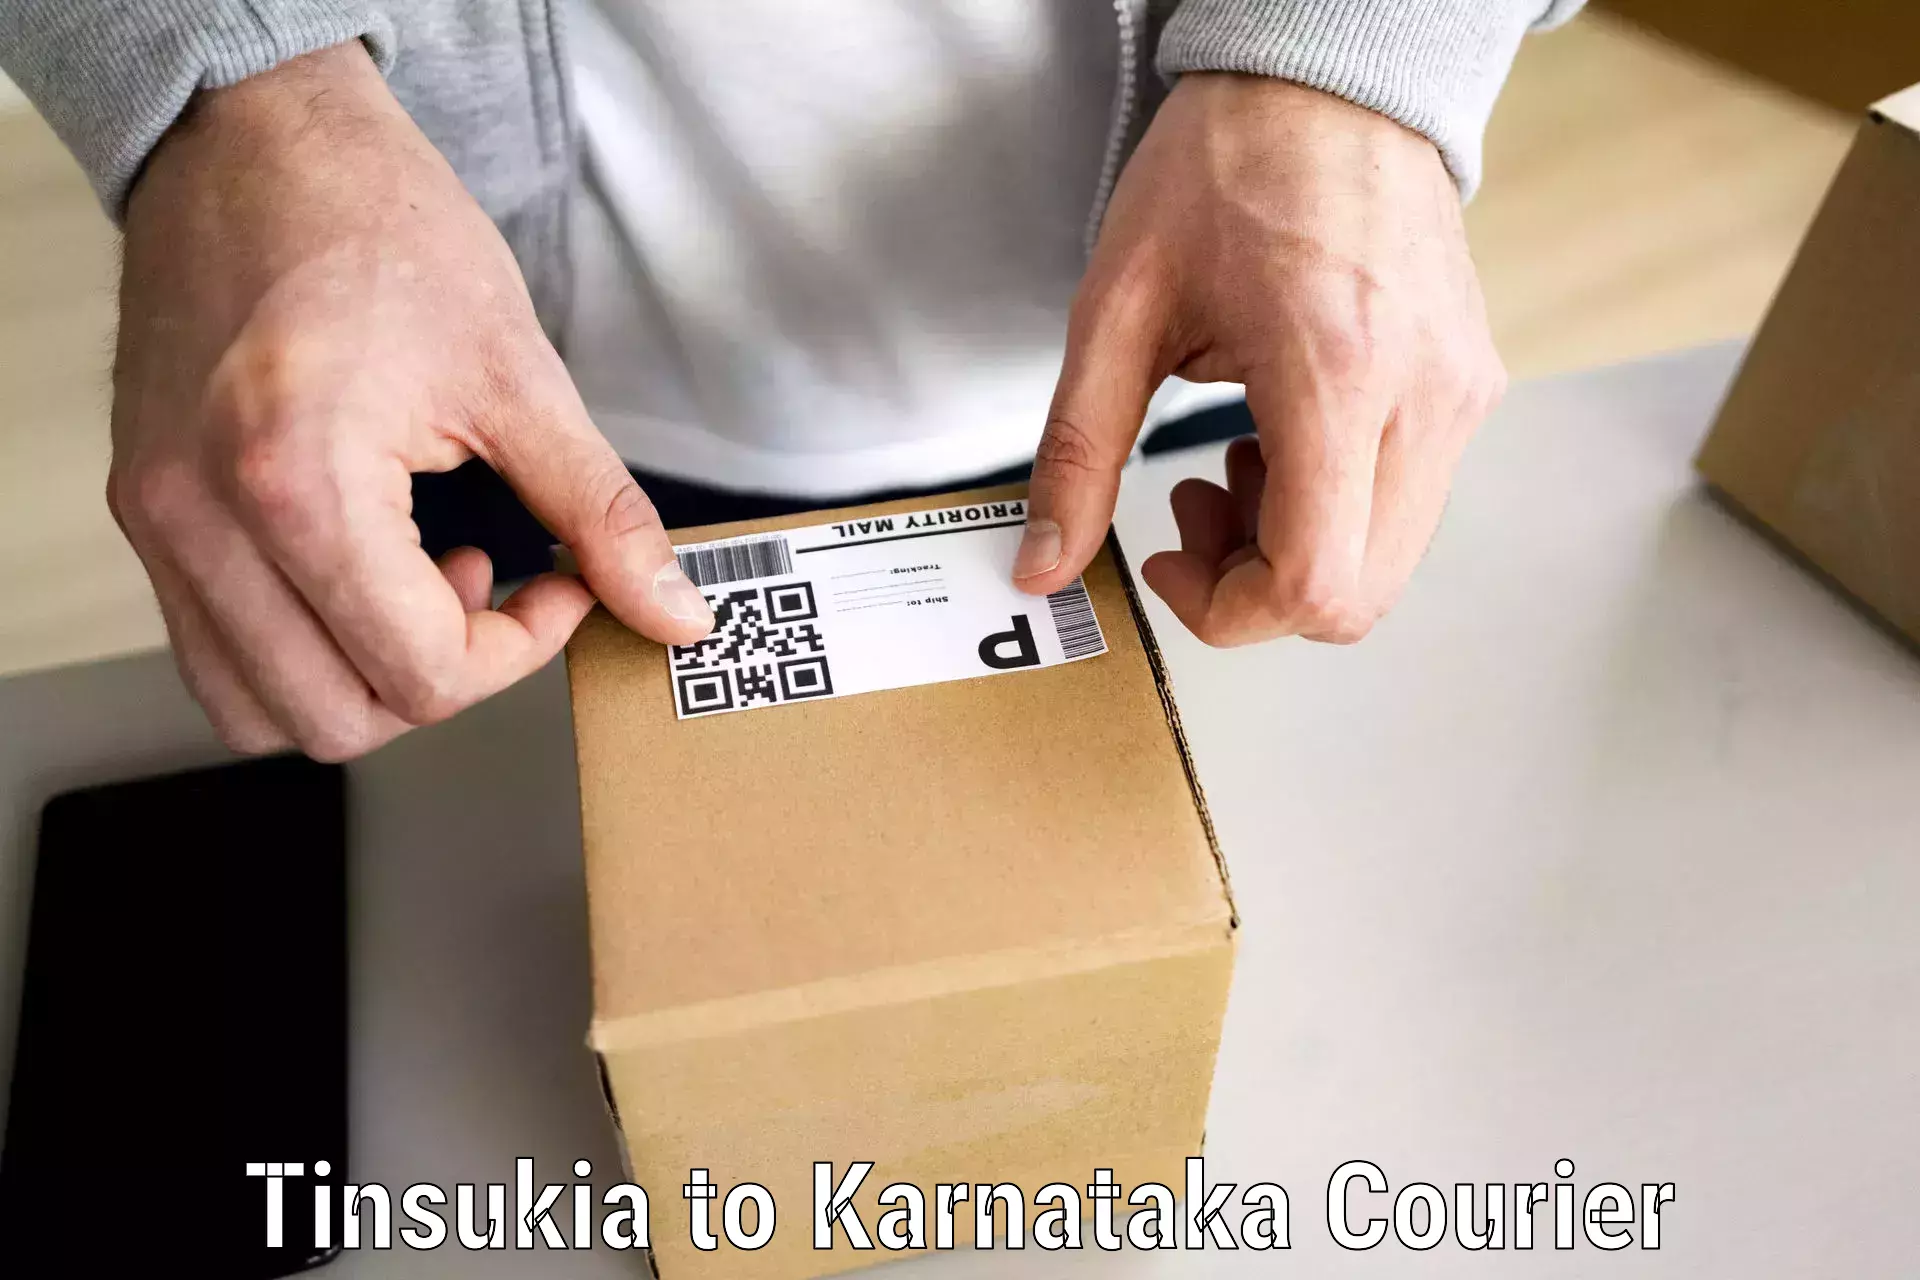 Furniture delivery service Tinsukia to Nagamangala